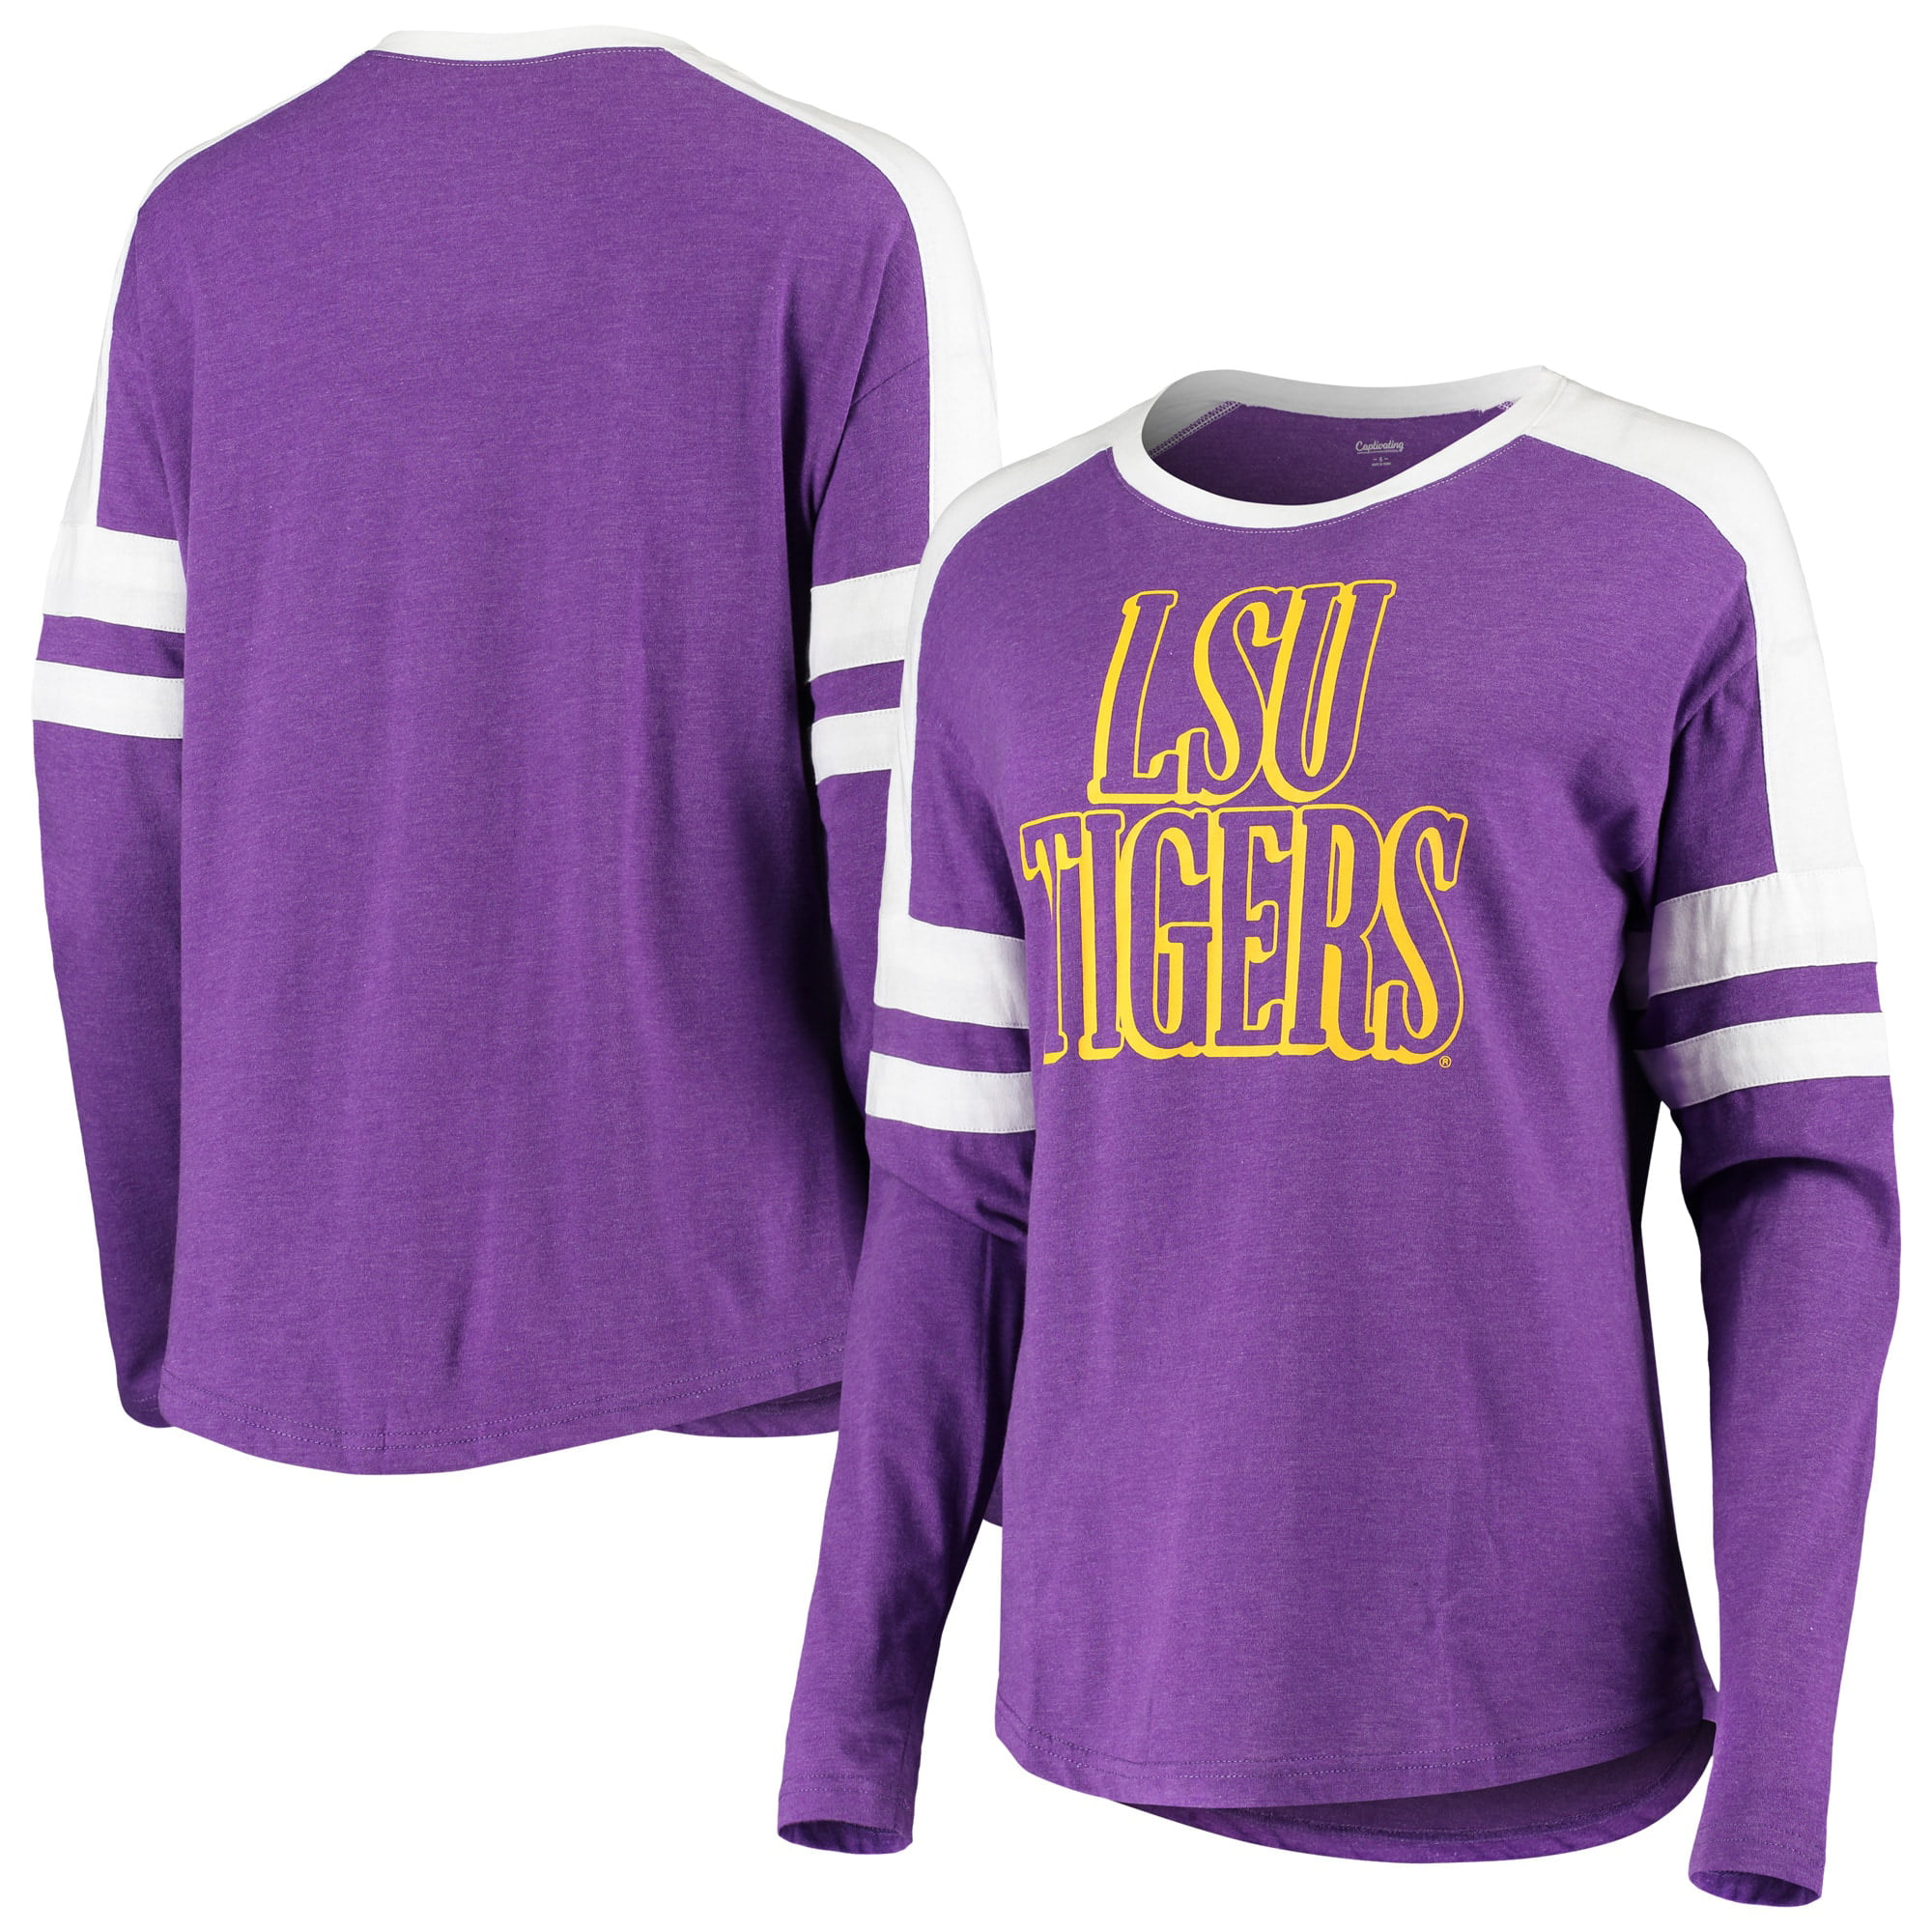 LSU Tiger Girls Scoop Neck Contrast Raglan Dolman Short Sleeve Purple and Gold